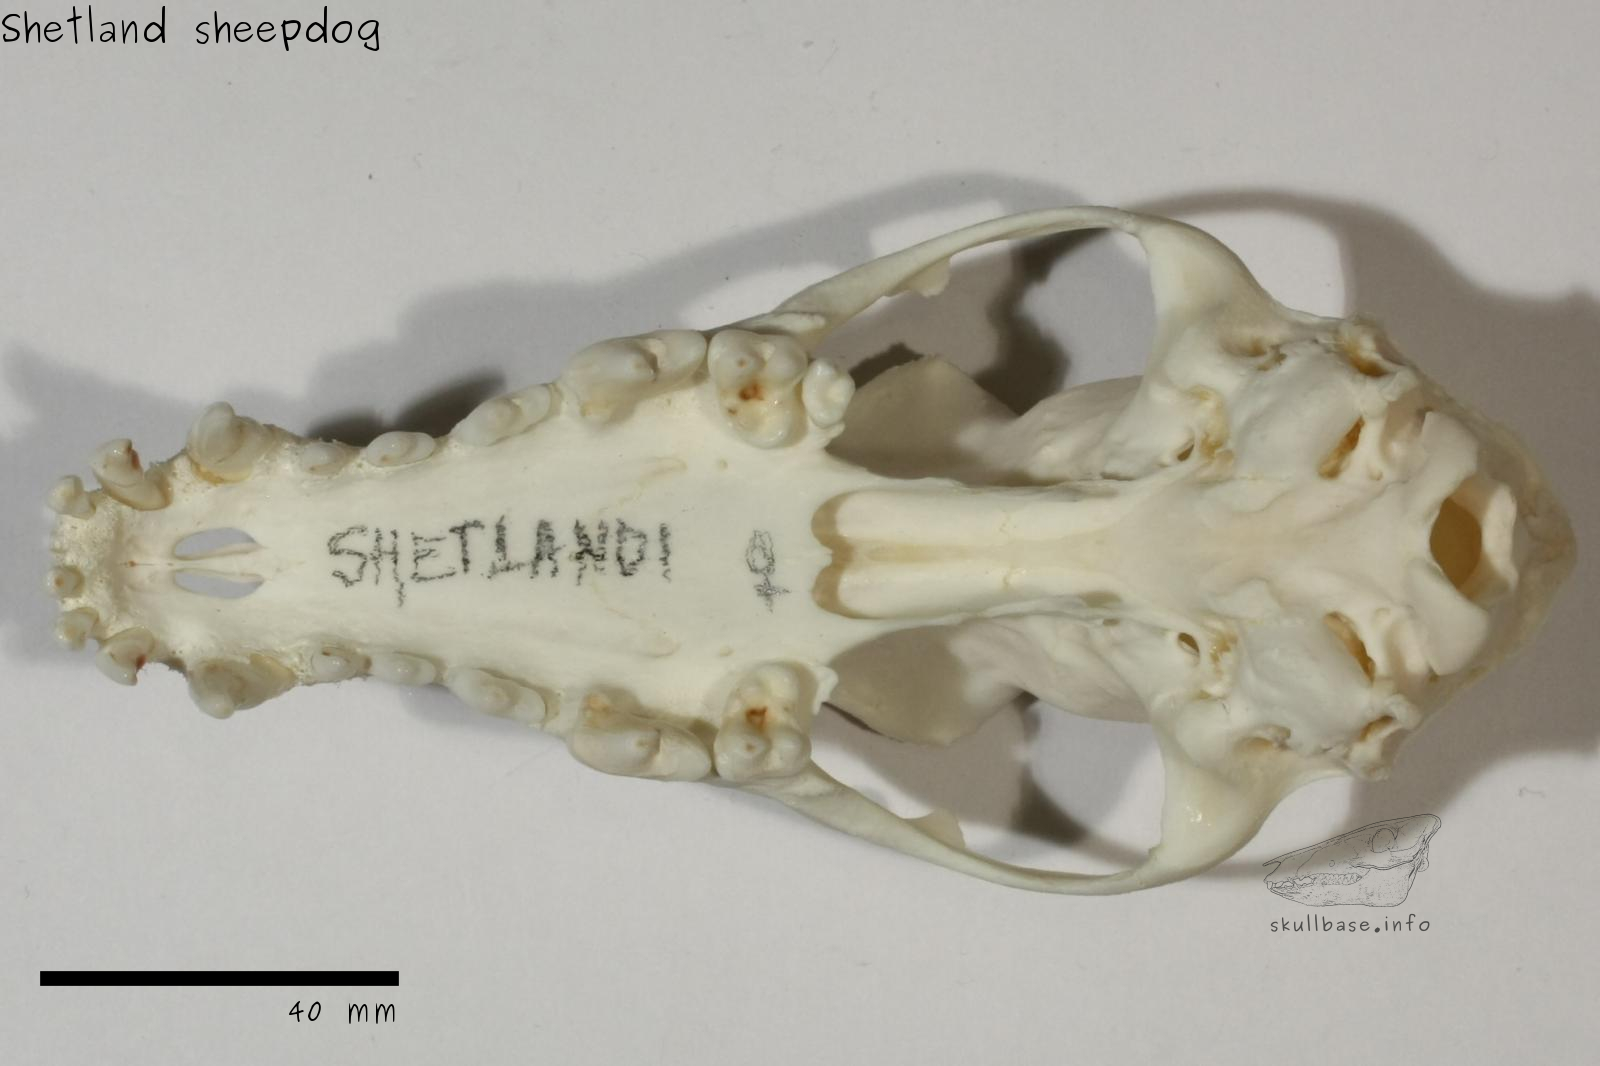 Shetland sheepdog (Canis lupus familiaris) skull ventral view